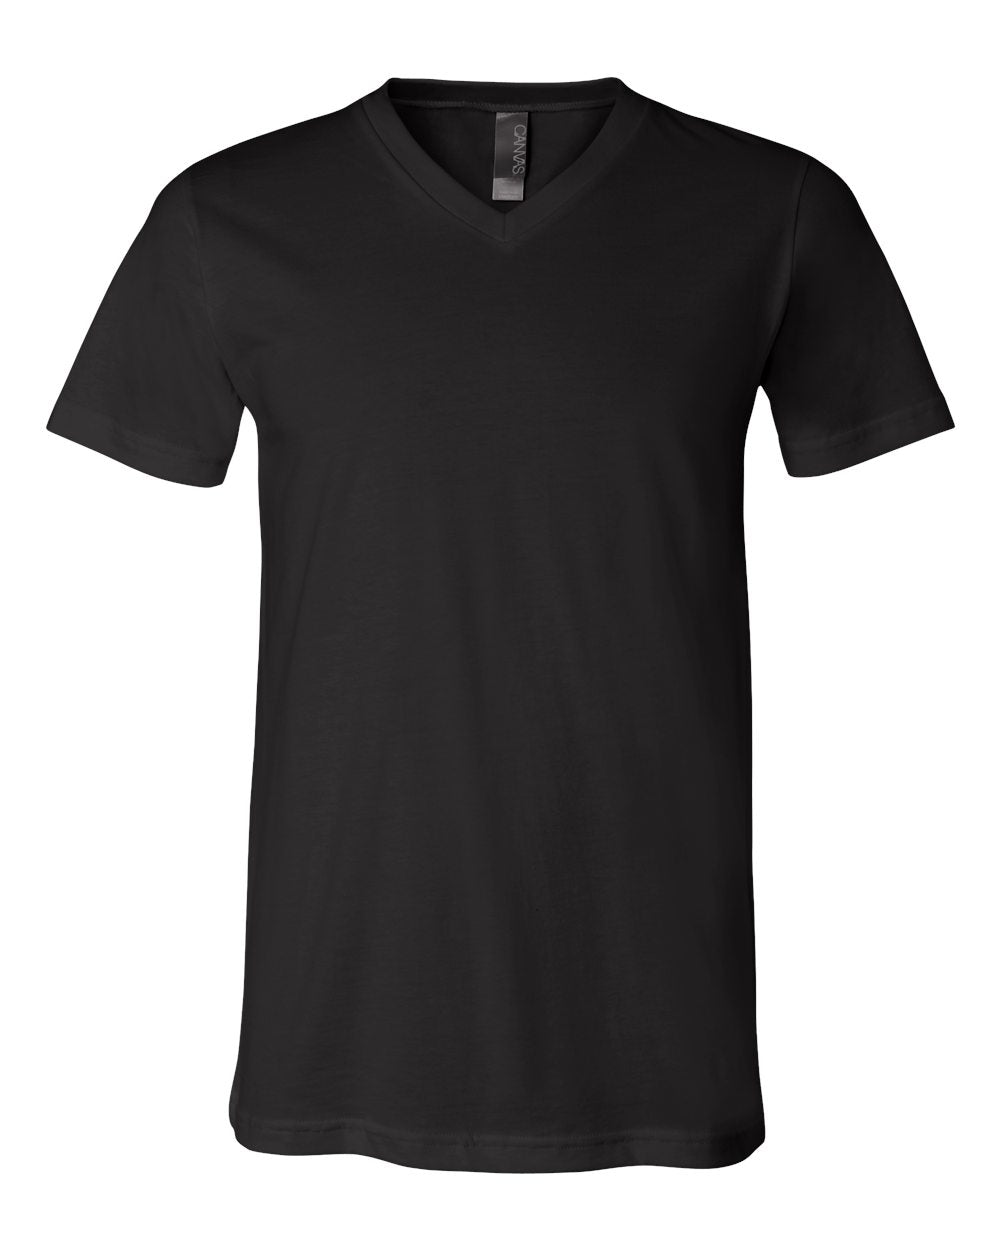 B3005 - T-shirt jersey unisexe à col en V